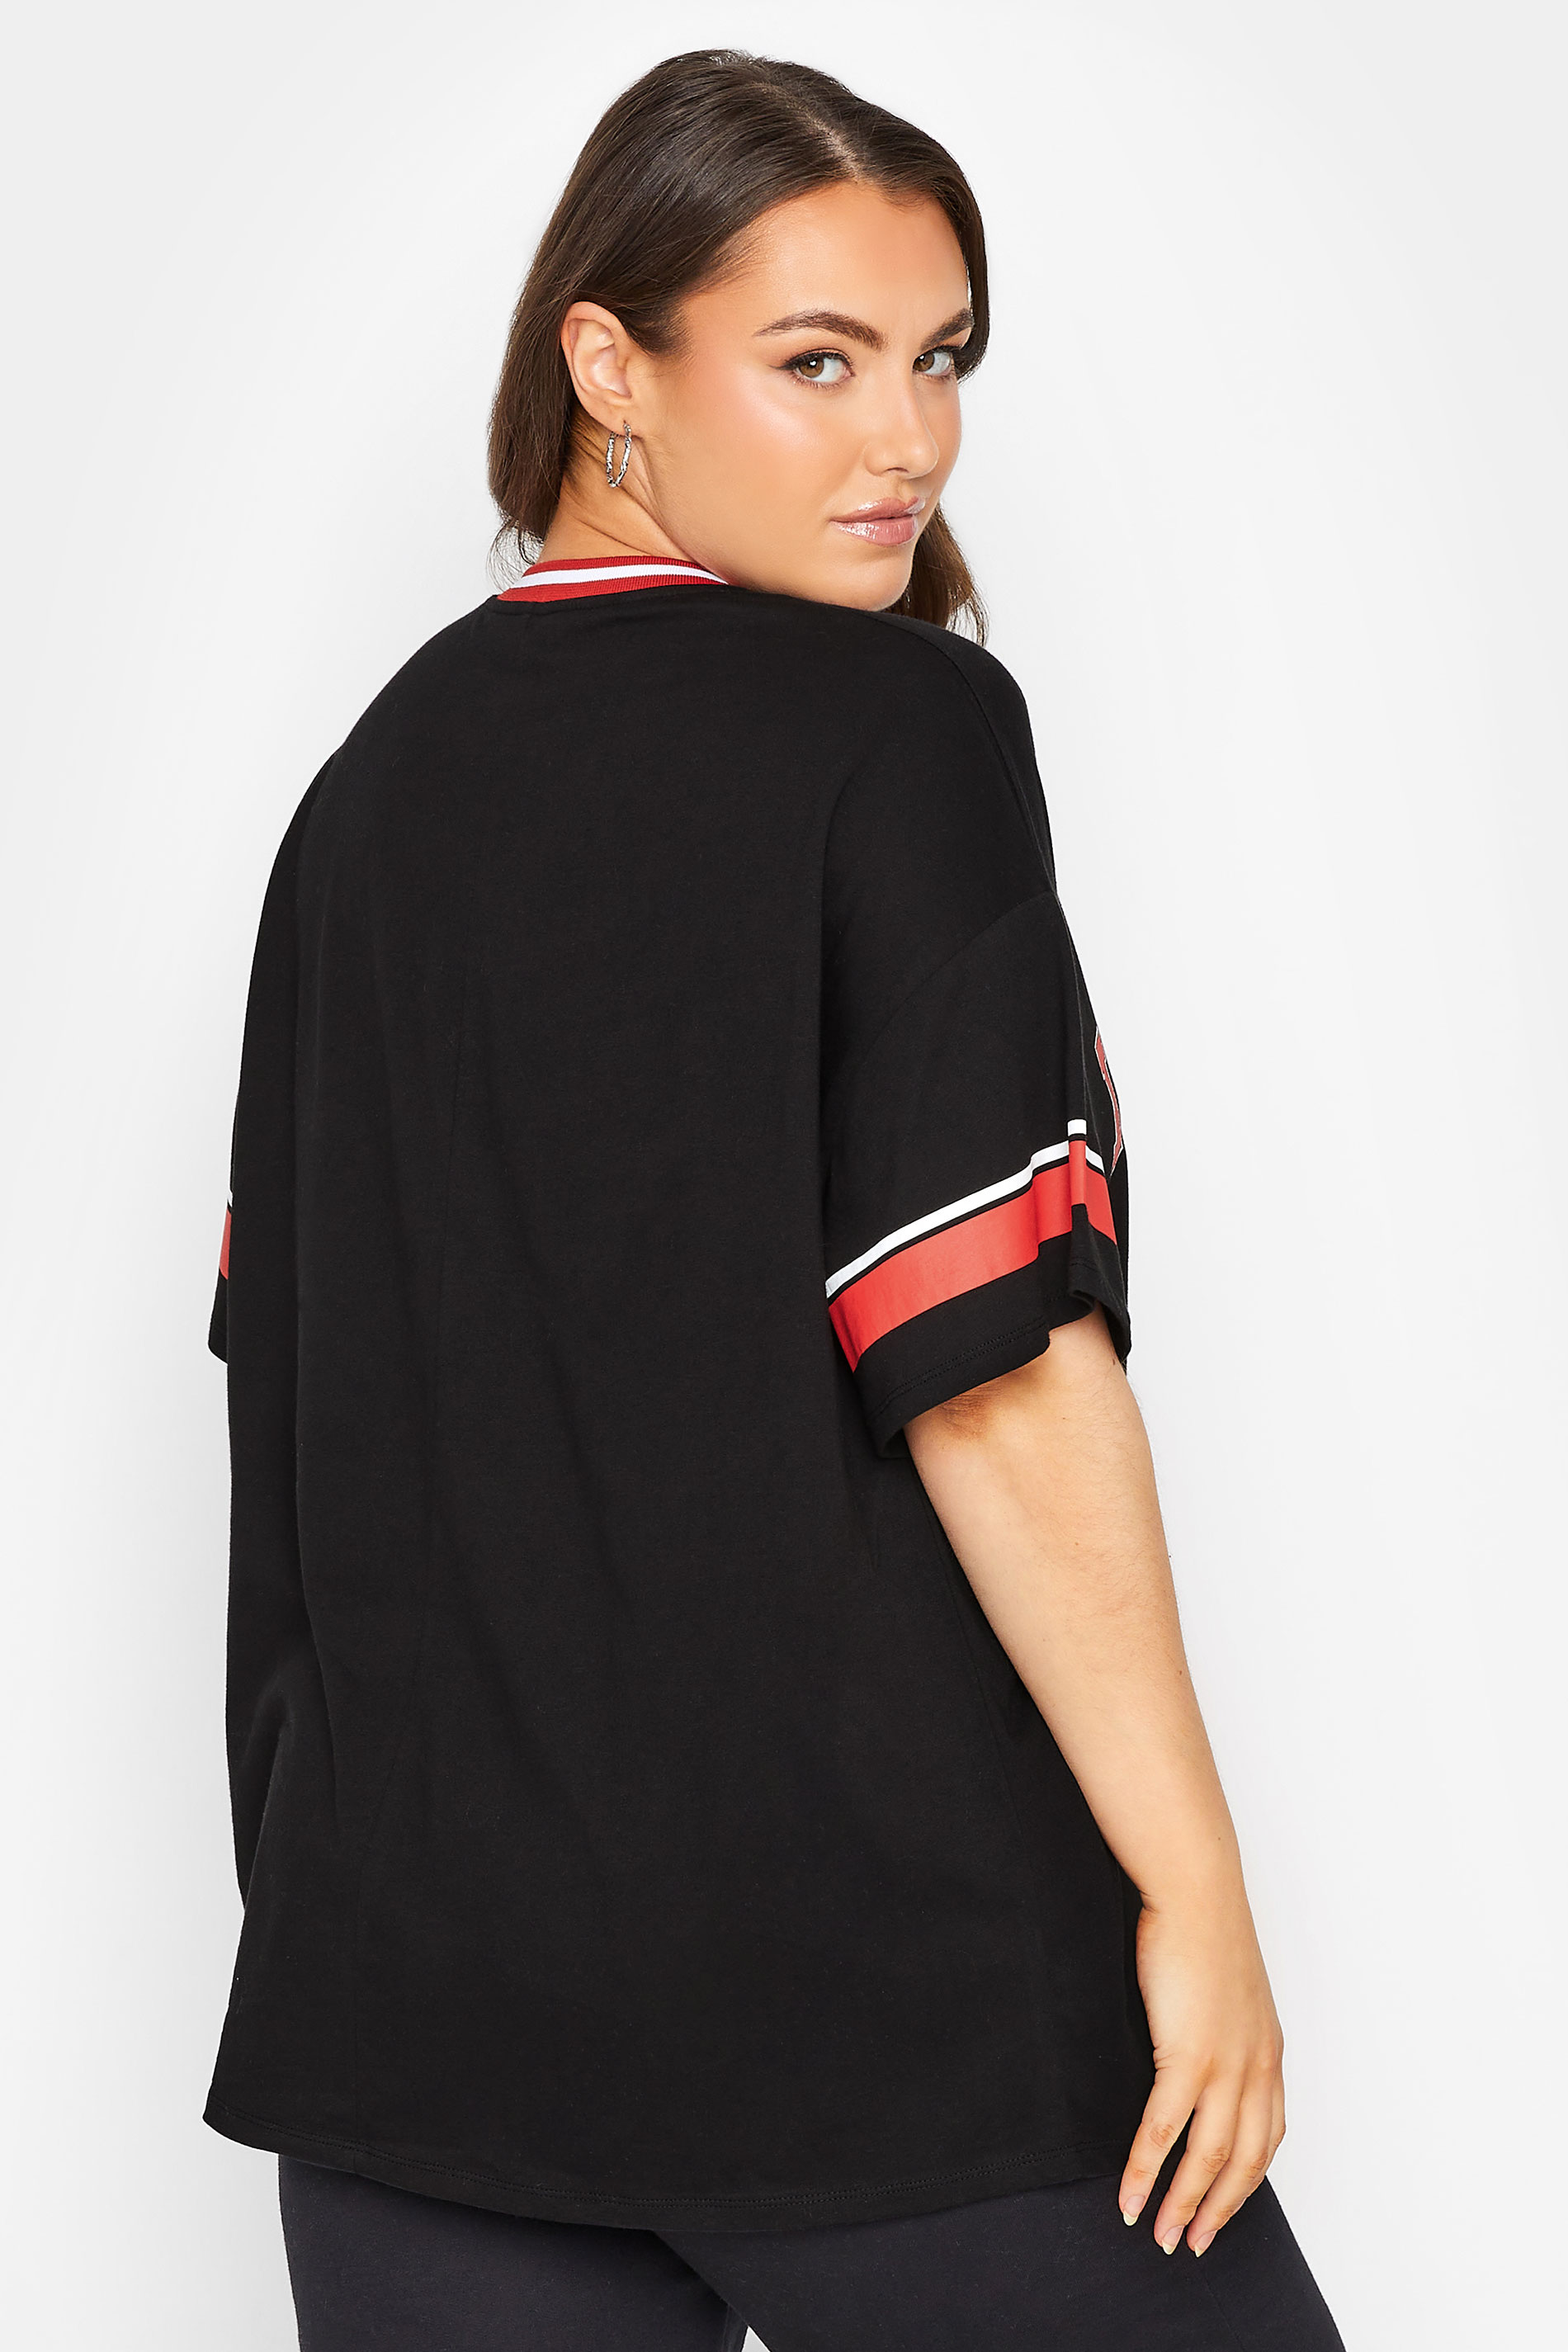 Plus Size Yours Curve Black 'Los Angeles' Varsity Tshirt Size 12 | Women's Plus Size and Curve Fashion